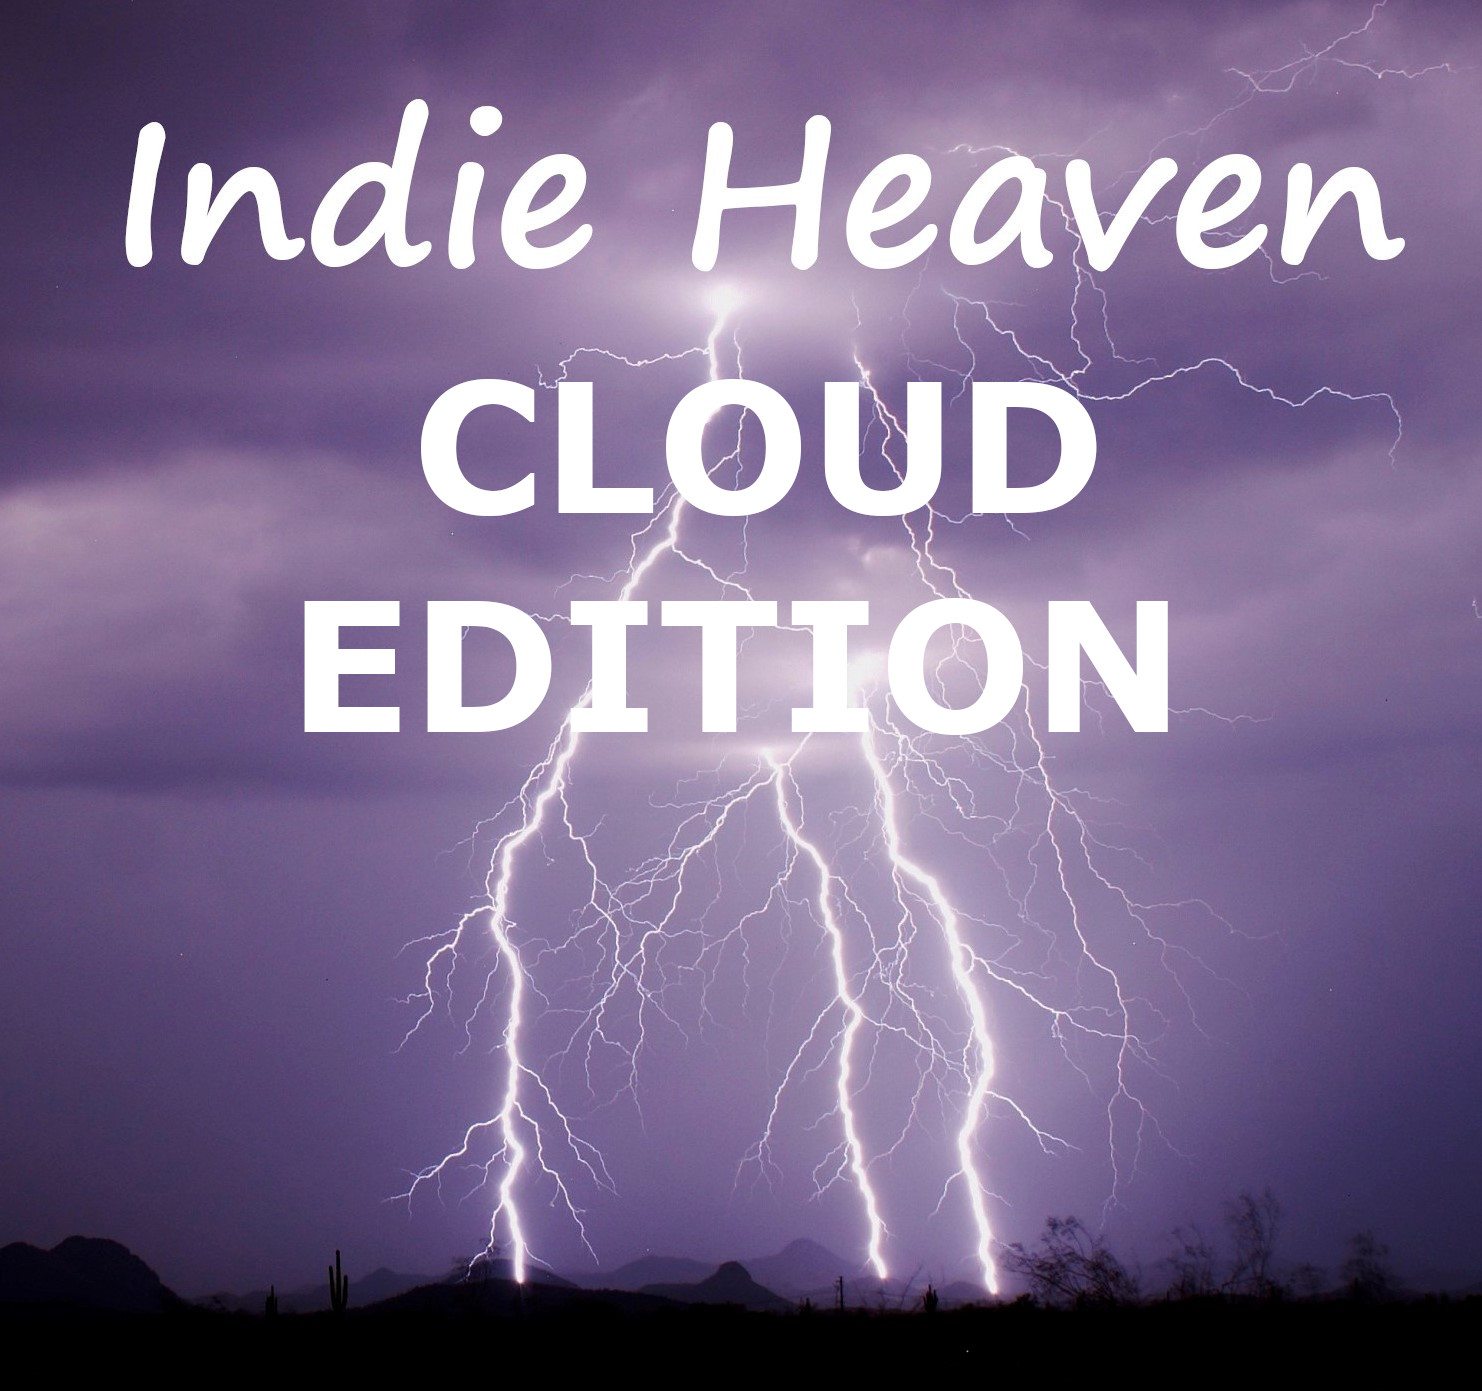 Indie Heaven Cloud Edition